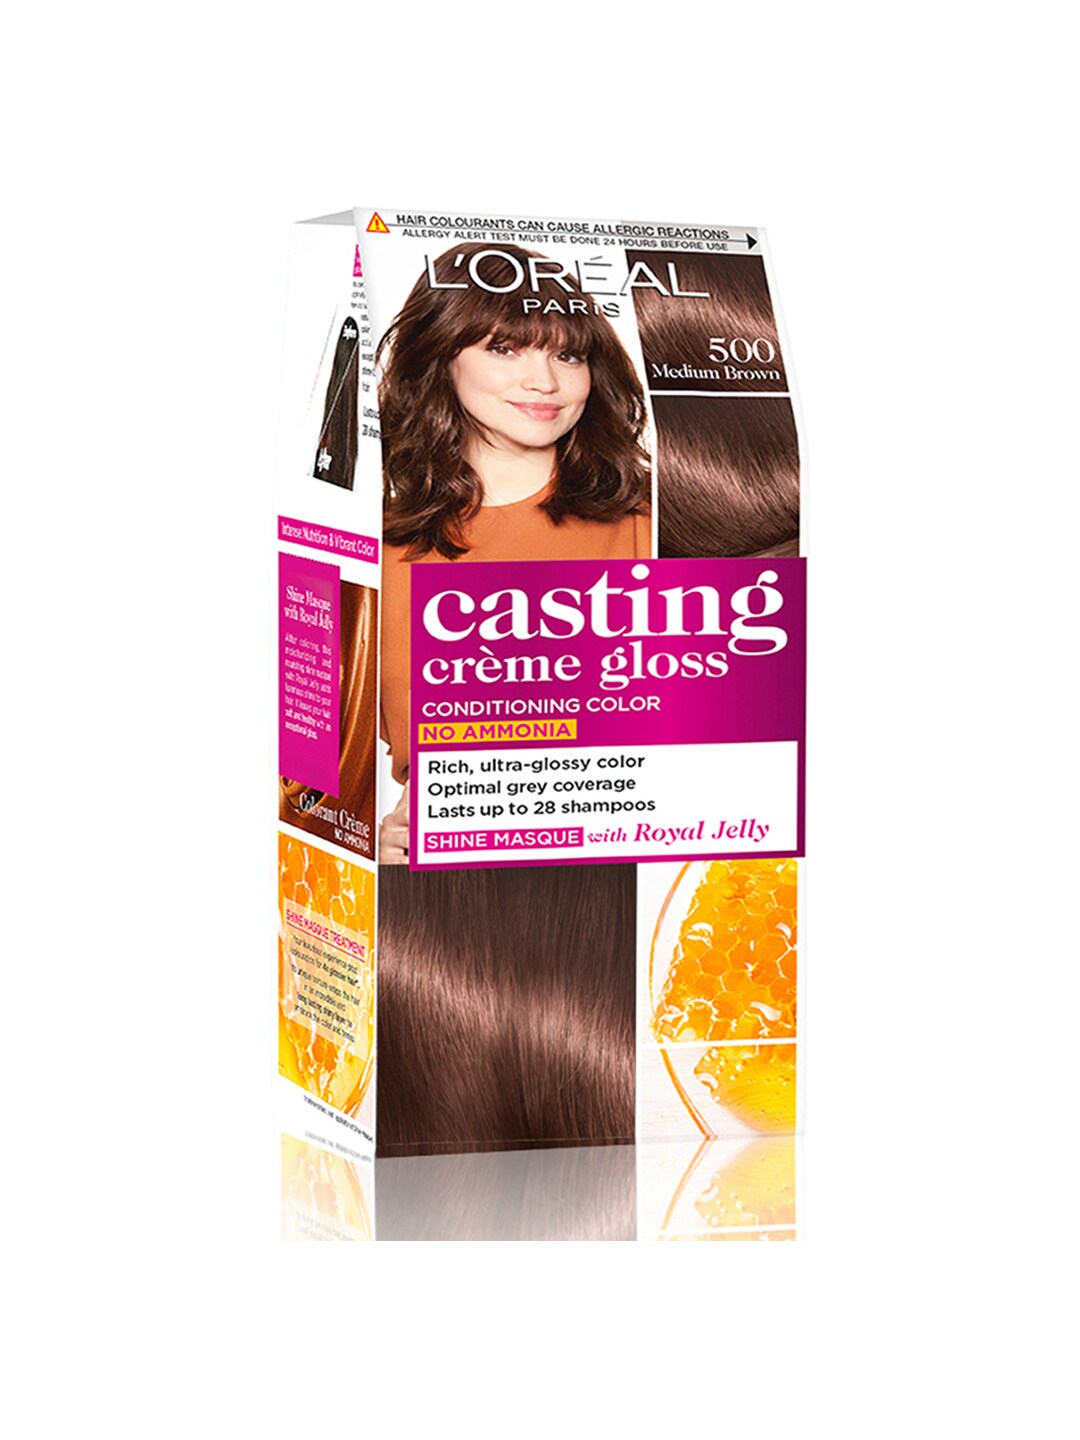 LOreal Paris Casting Creme Gloss Hair Color - Medium Brown 500 (87.5 g + 72 ml) Price in India